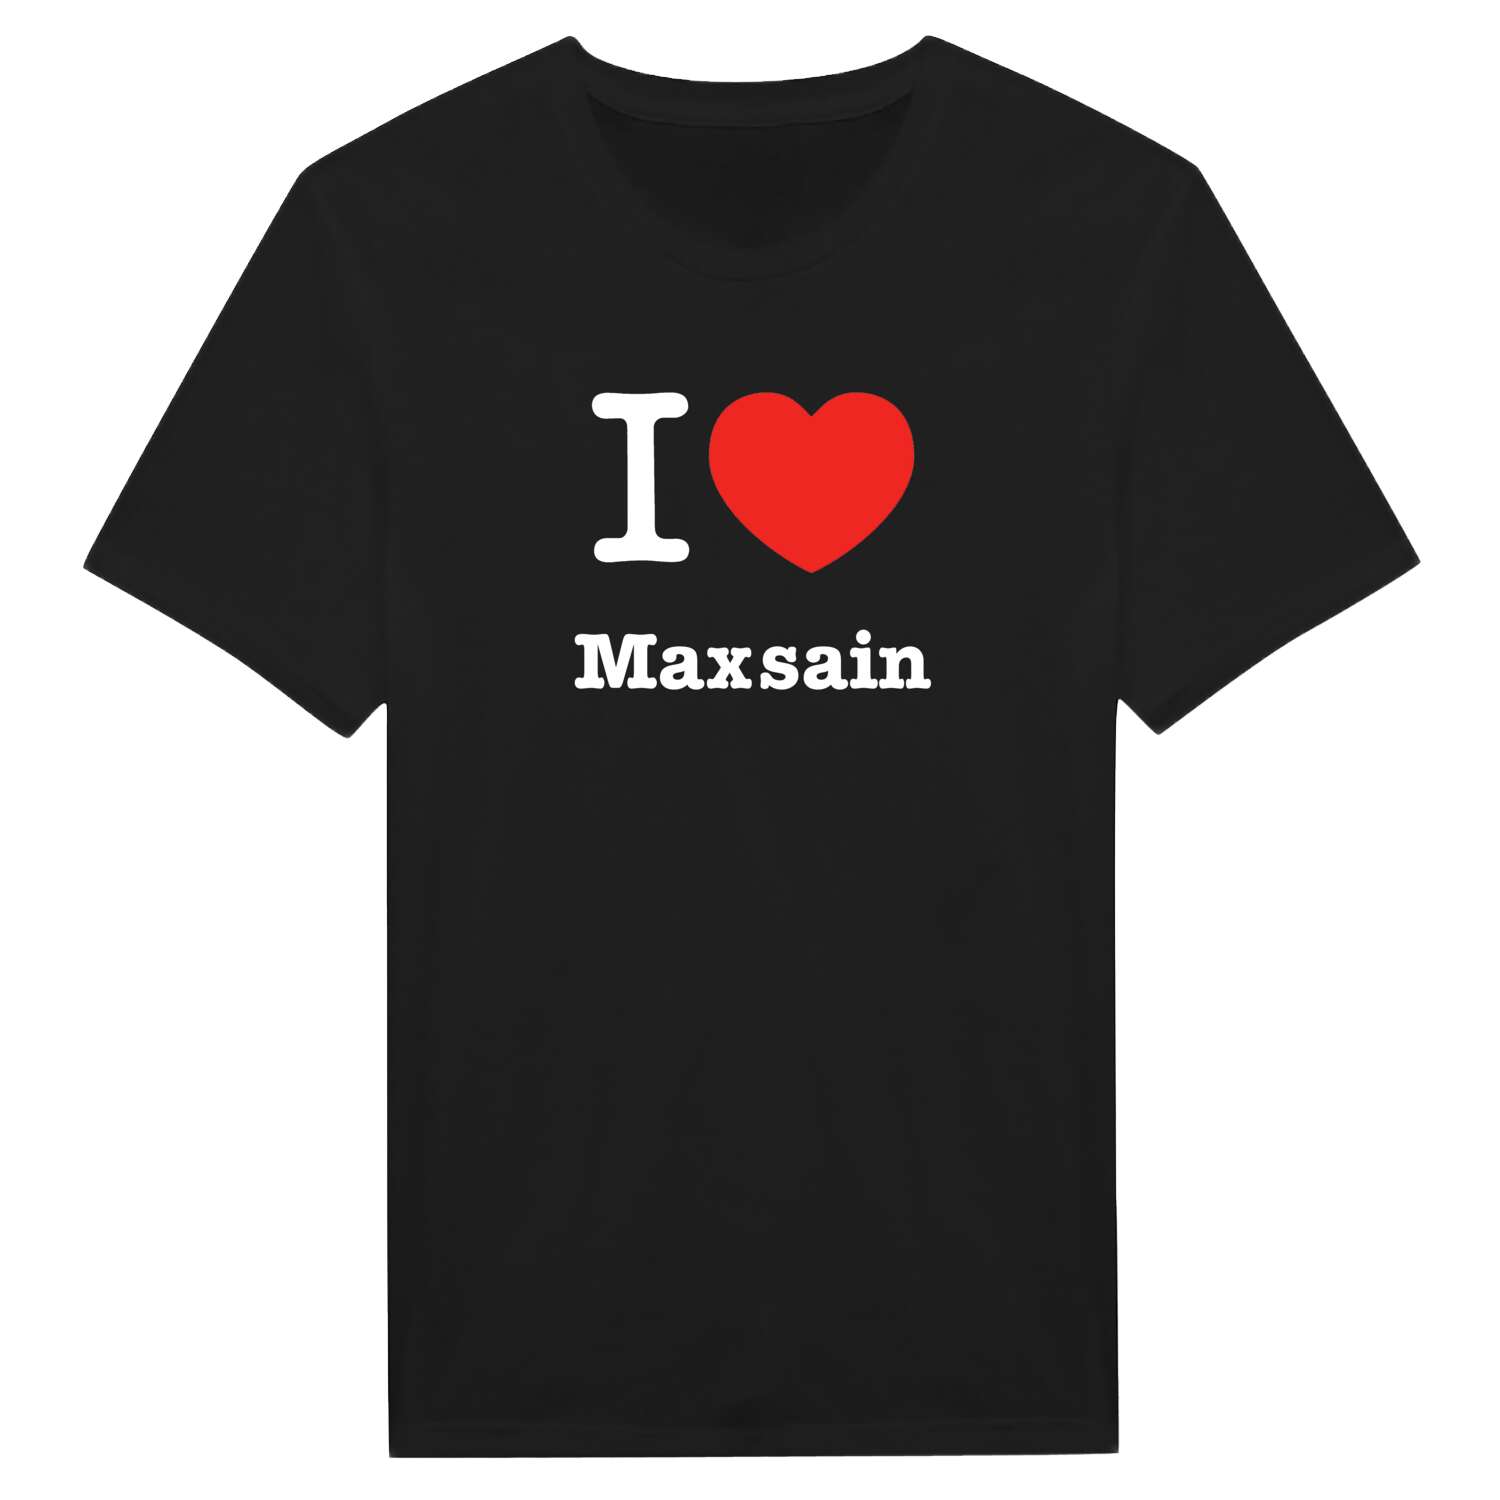 Maxsain T-Shirt »I love«